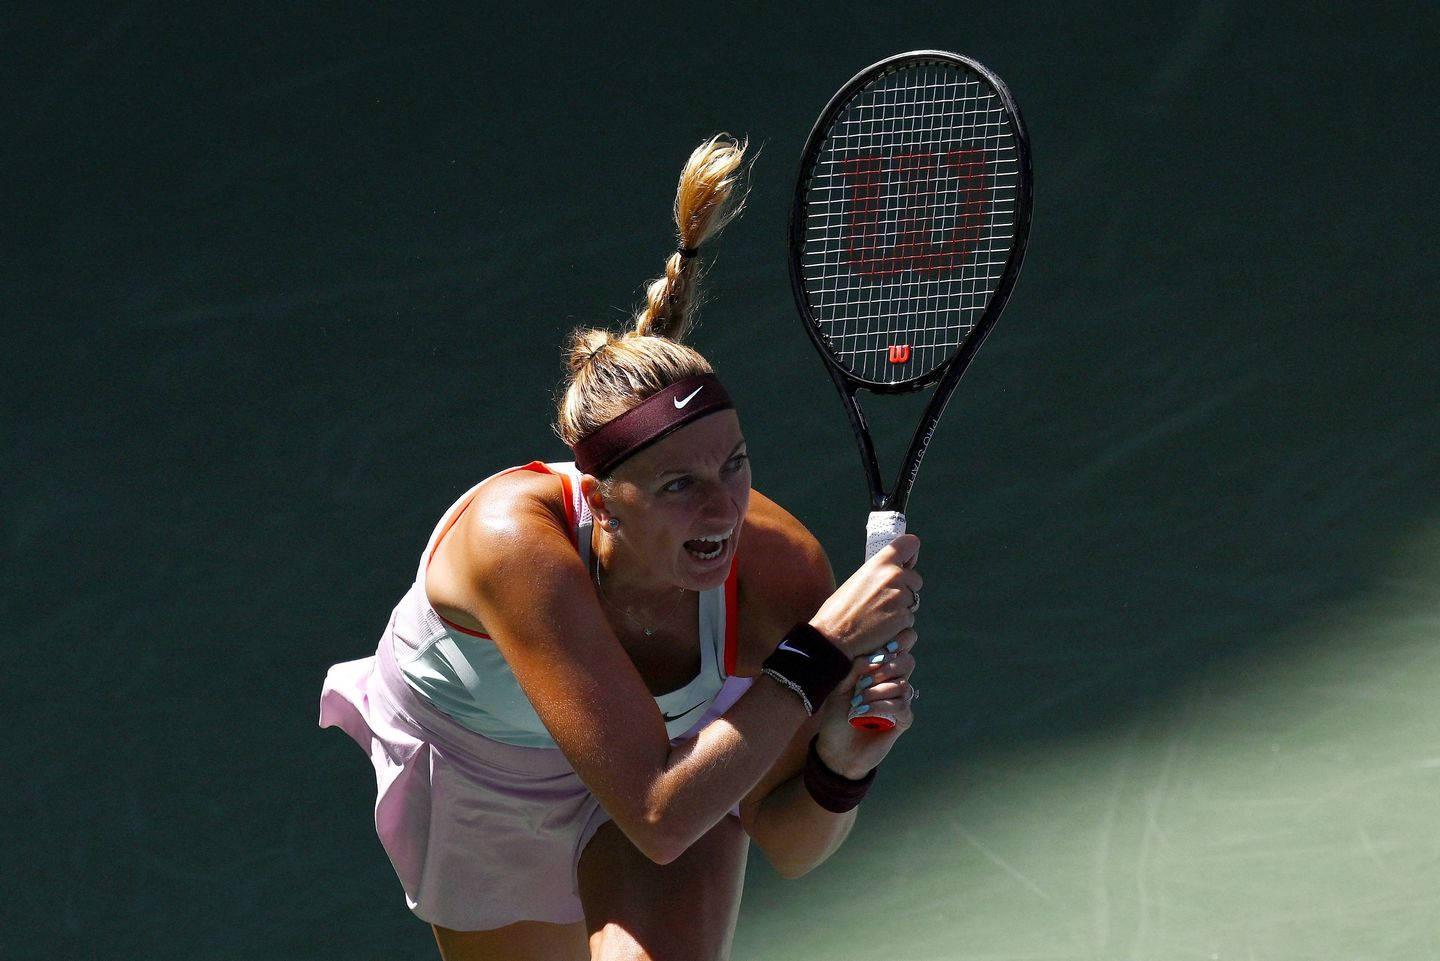 Petra Kvitova In Action - Dominating The Tennis Court Background